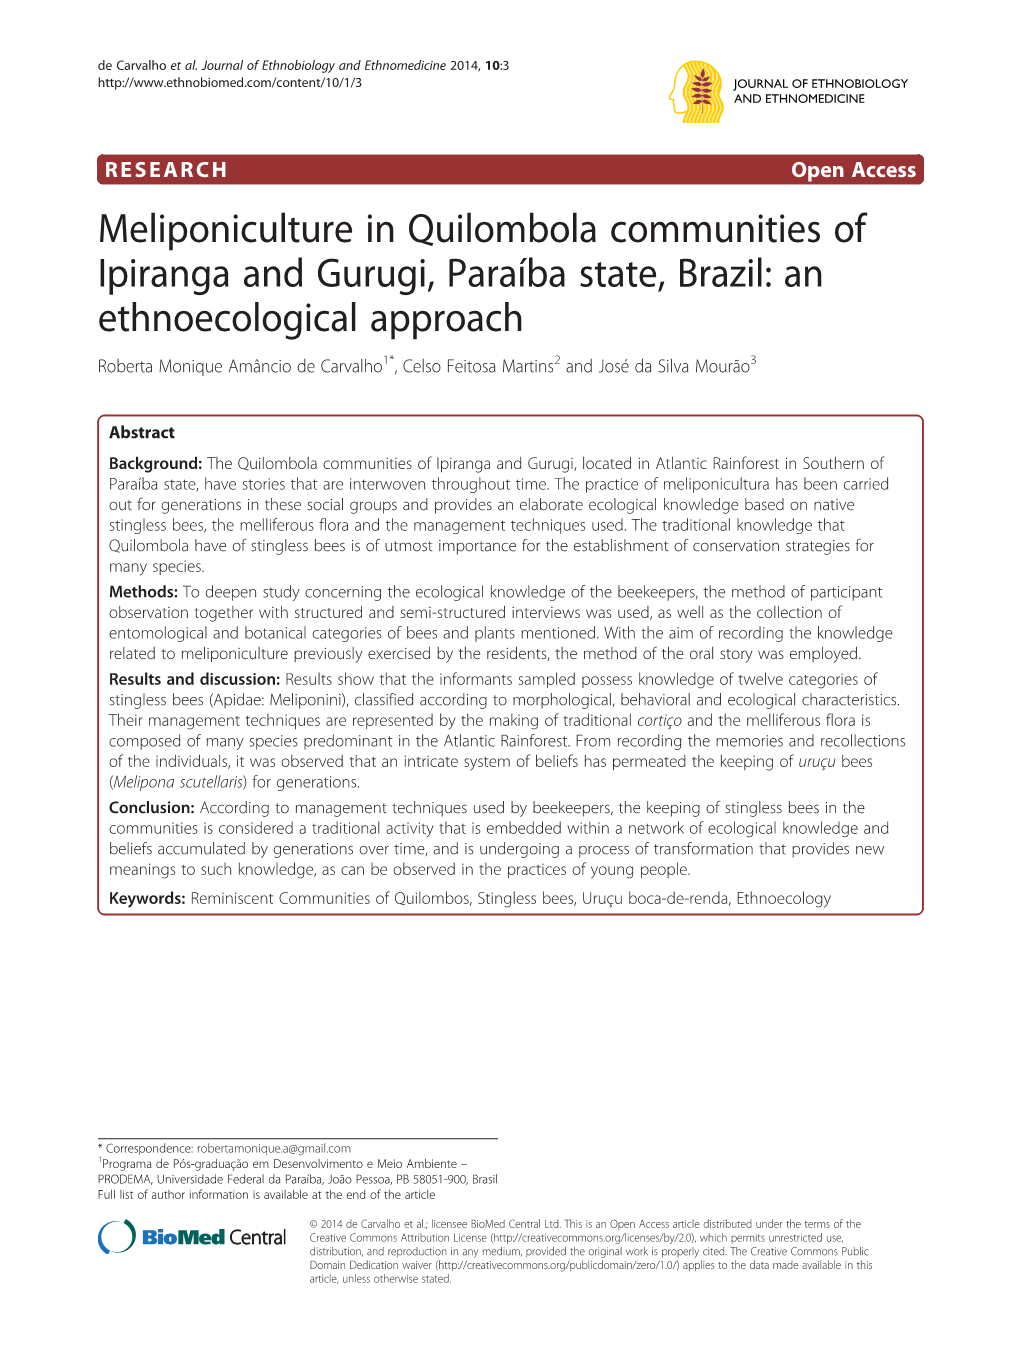 Meliponiculture in Quilombola Communities of Ipiranga and Gurugi